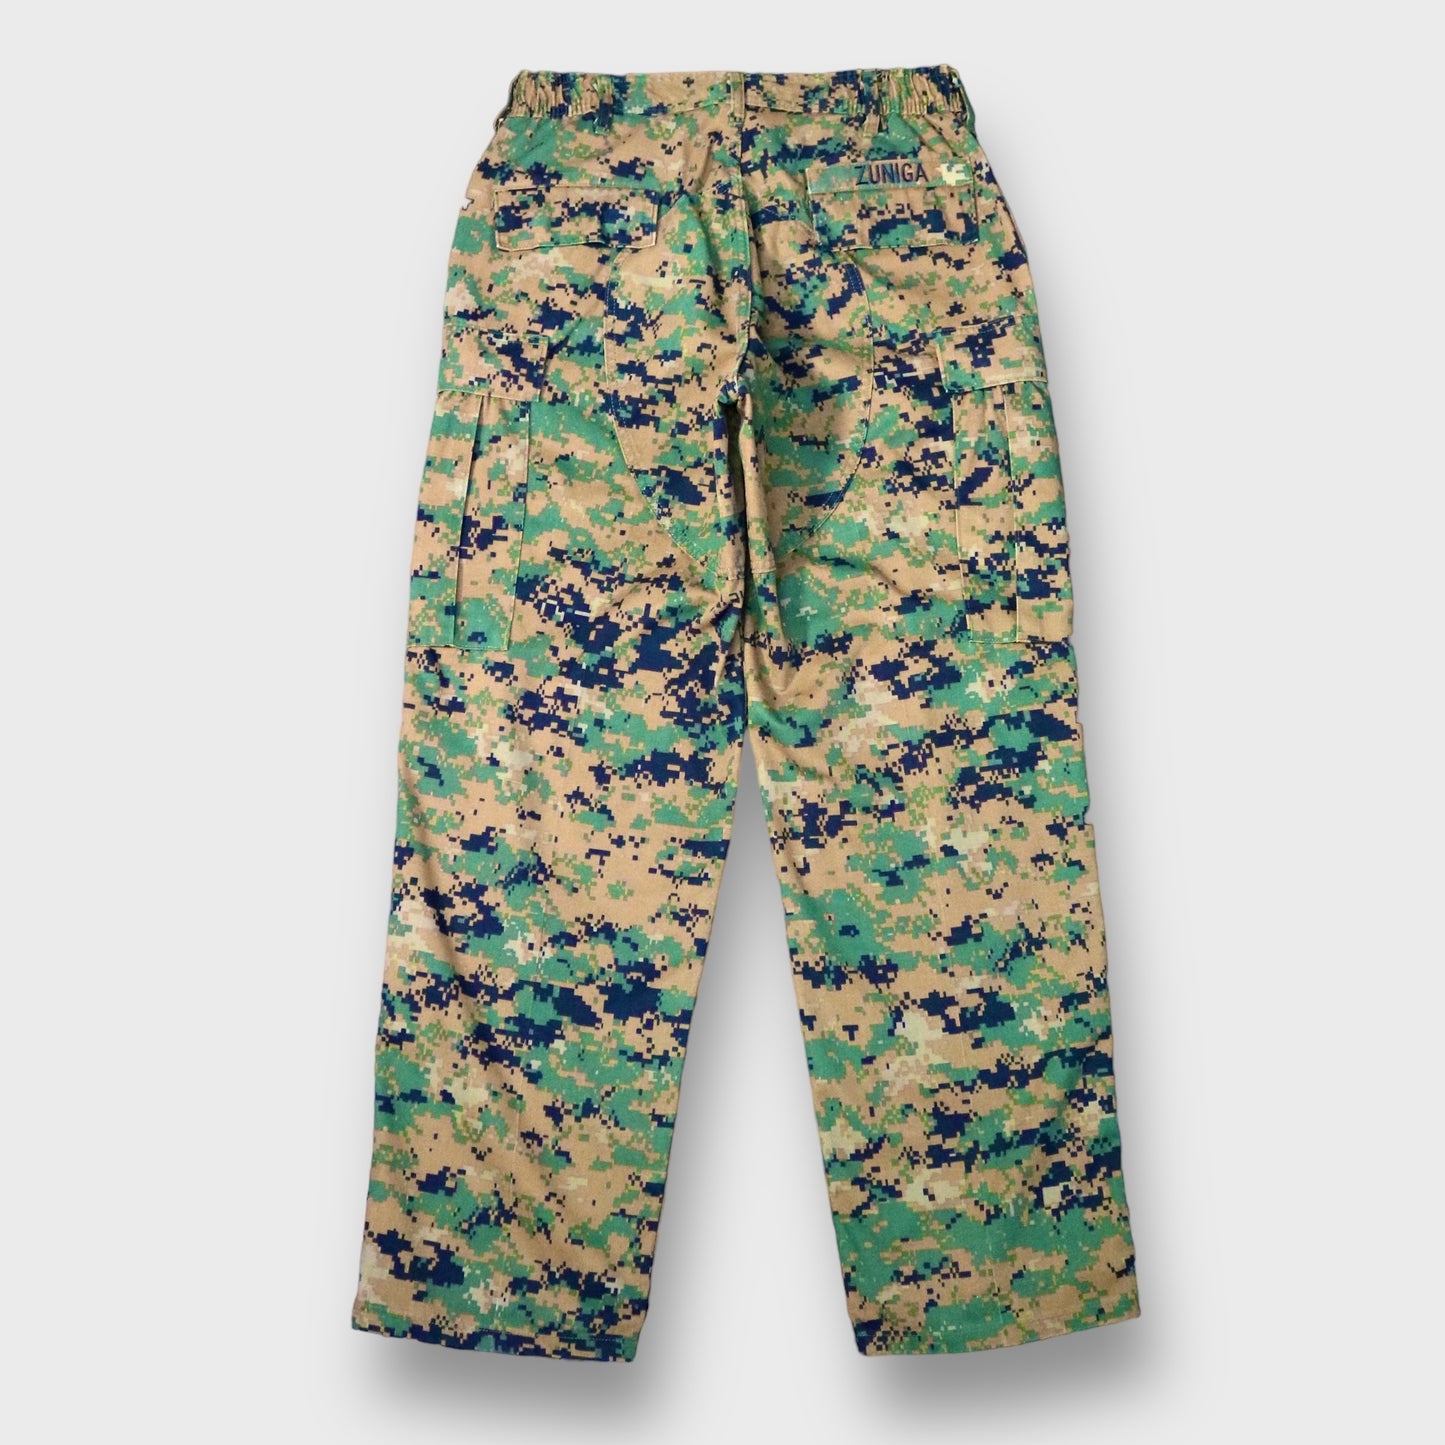 "US army" Digital camouflage pattern field cargo pants